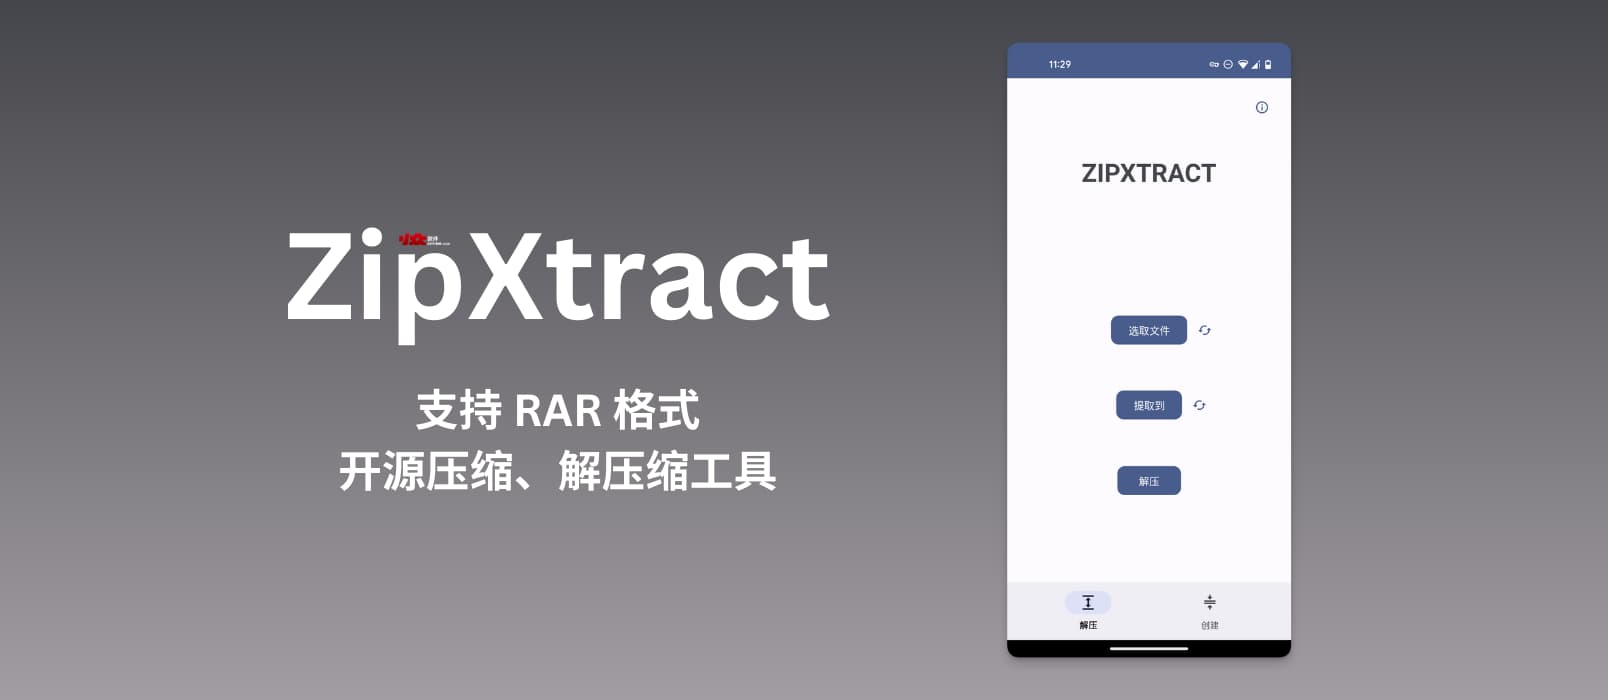 ZipXtract - 支持 RAR 格式，开源压缩、解压缩工具[Android]